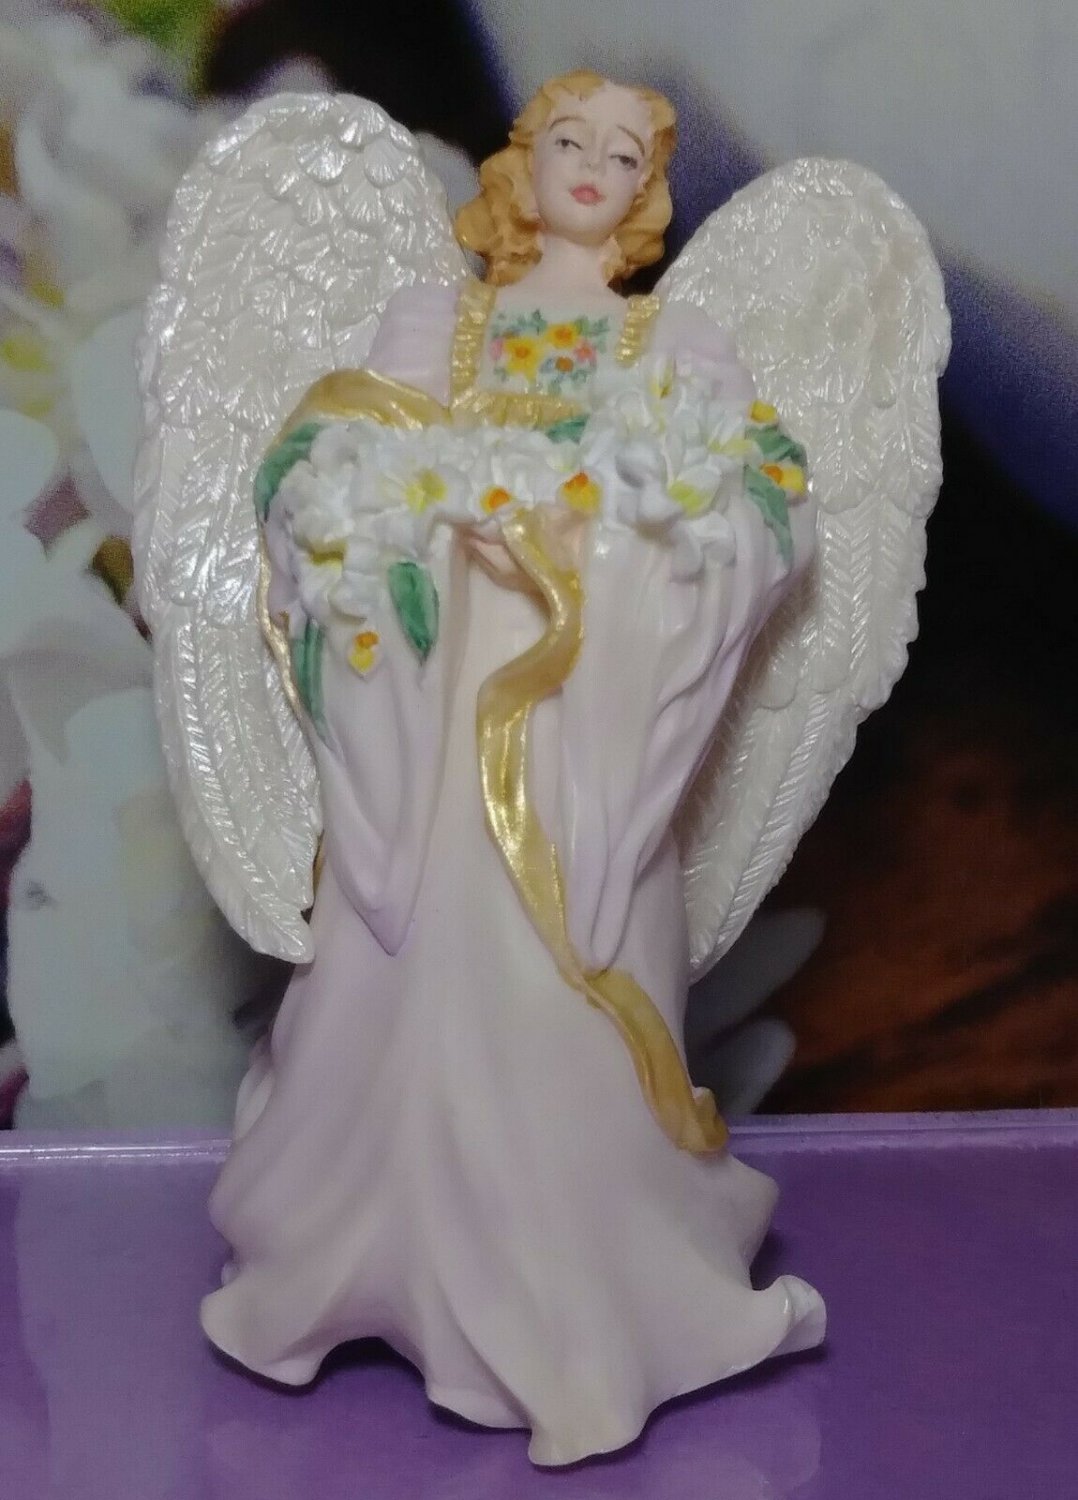 1996 EASTER COLLECTION JOYFUL ANGELS #1 HALLMARK KEEPSAKE ORNAMENT 